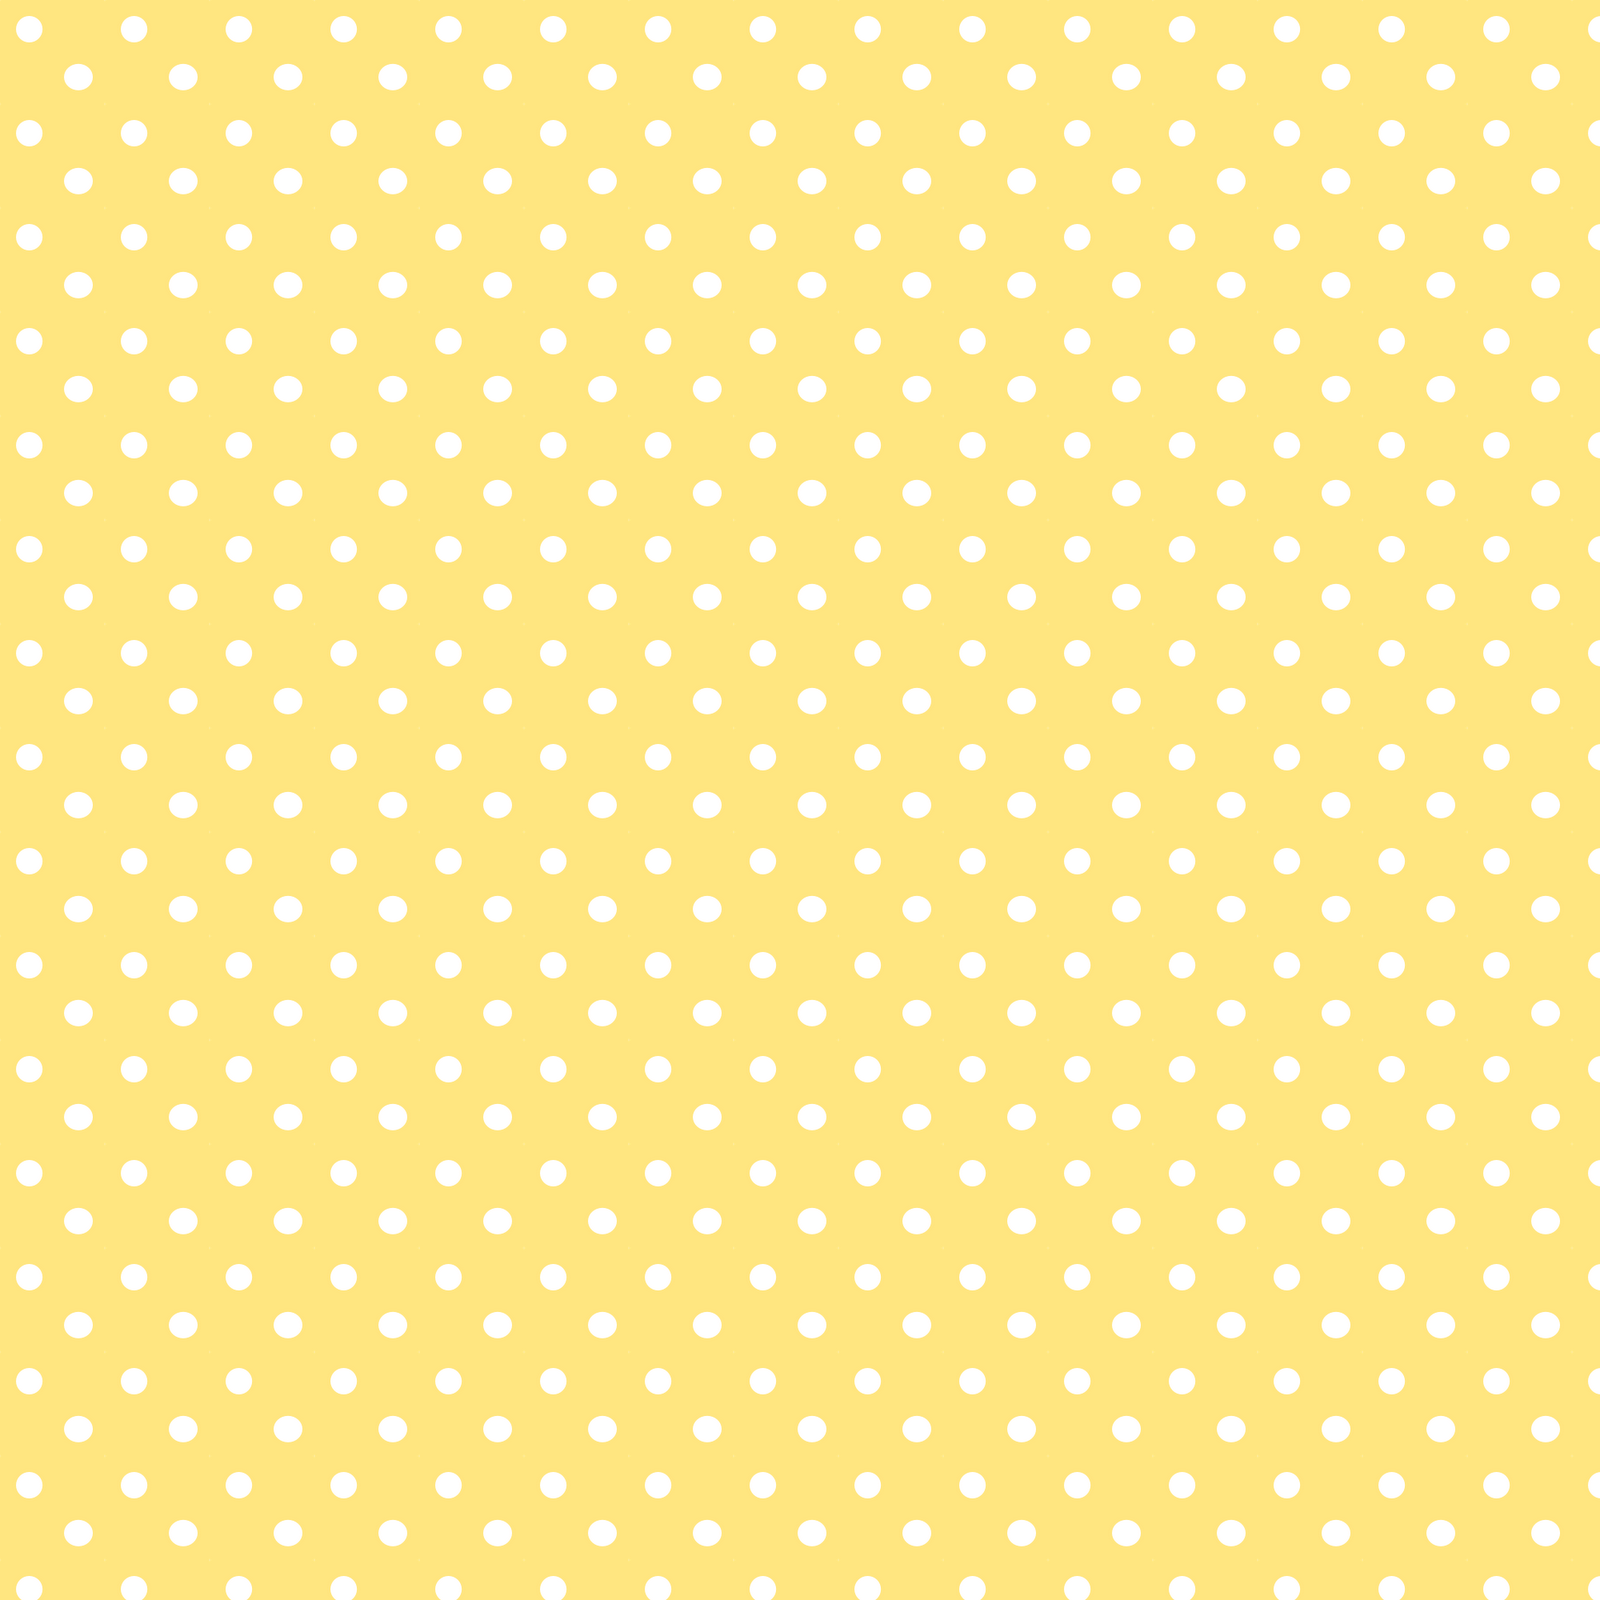 Free Polka Dot Background PNG - 153093